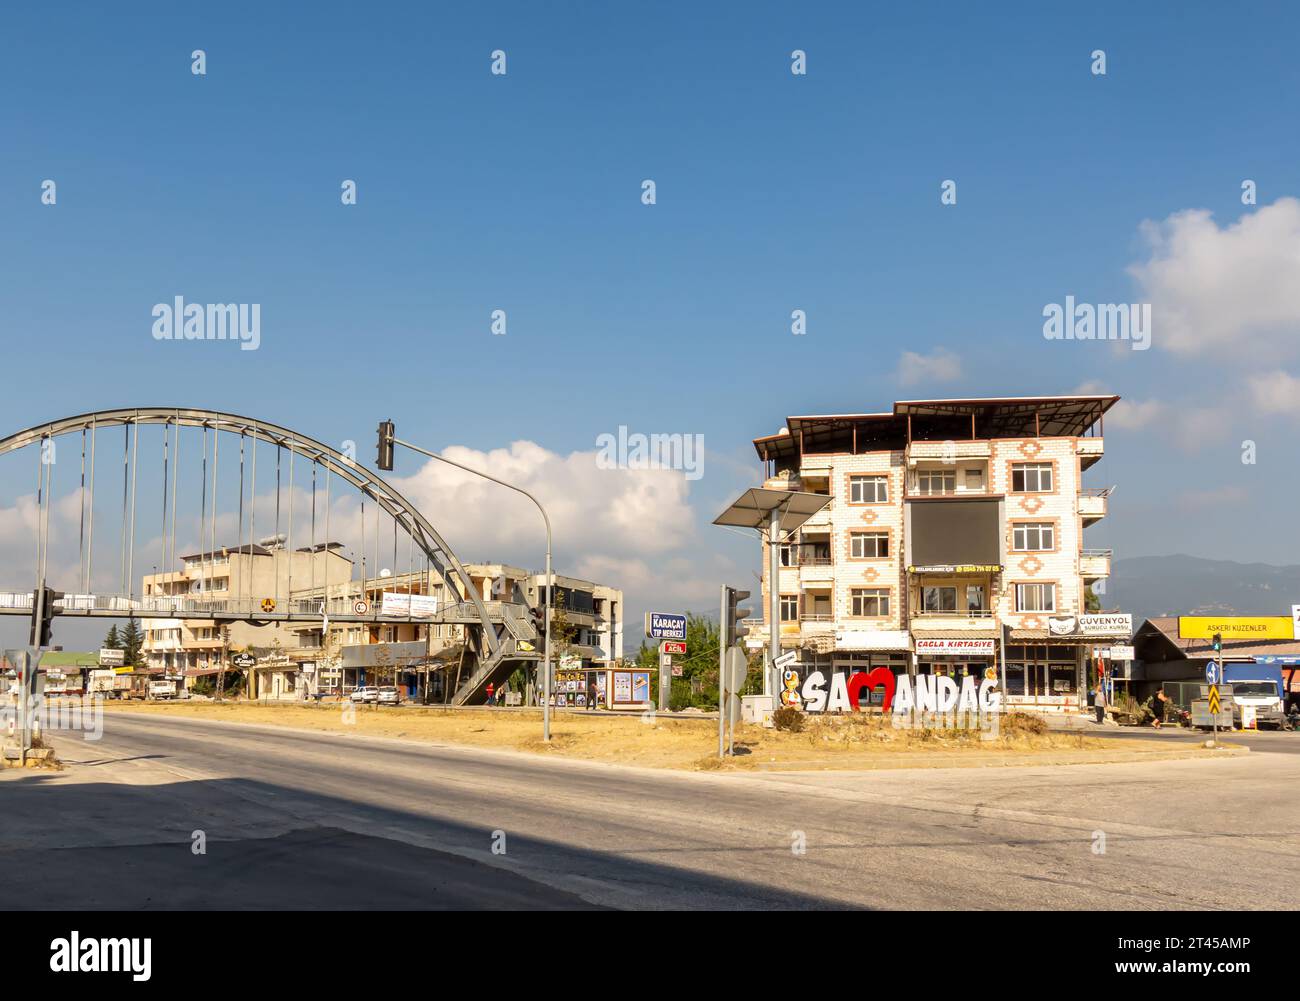 Samandağ, formerly Süveydiye, is a municipality and district of Hatay Province, Turkey. Stock Photo